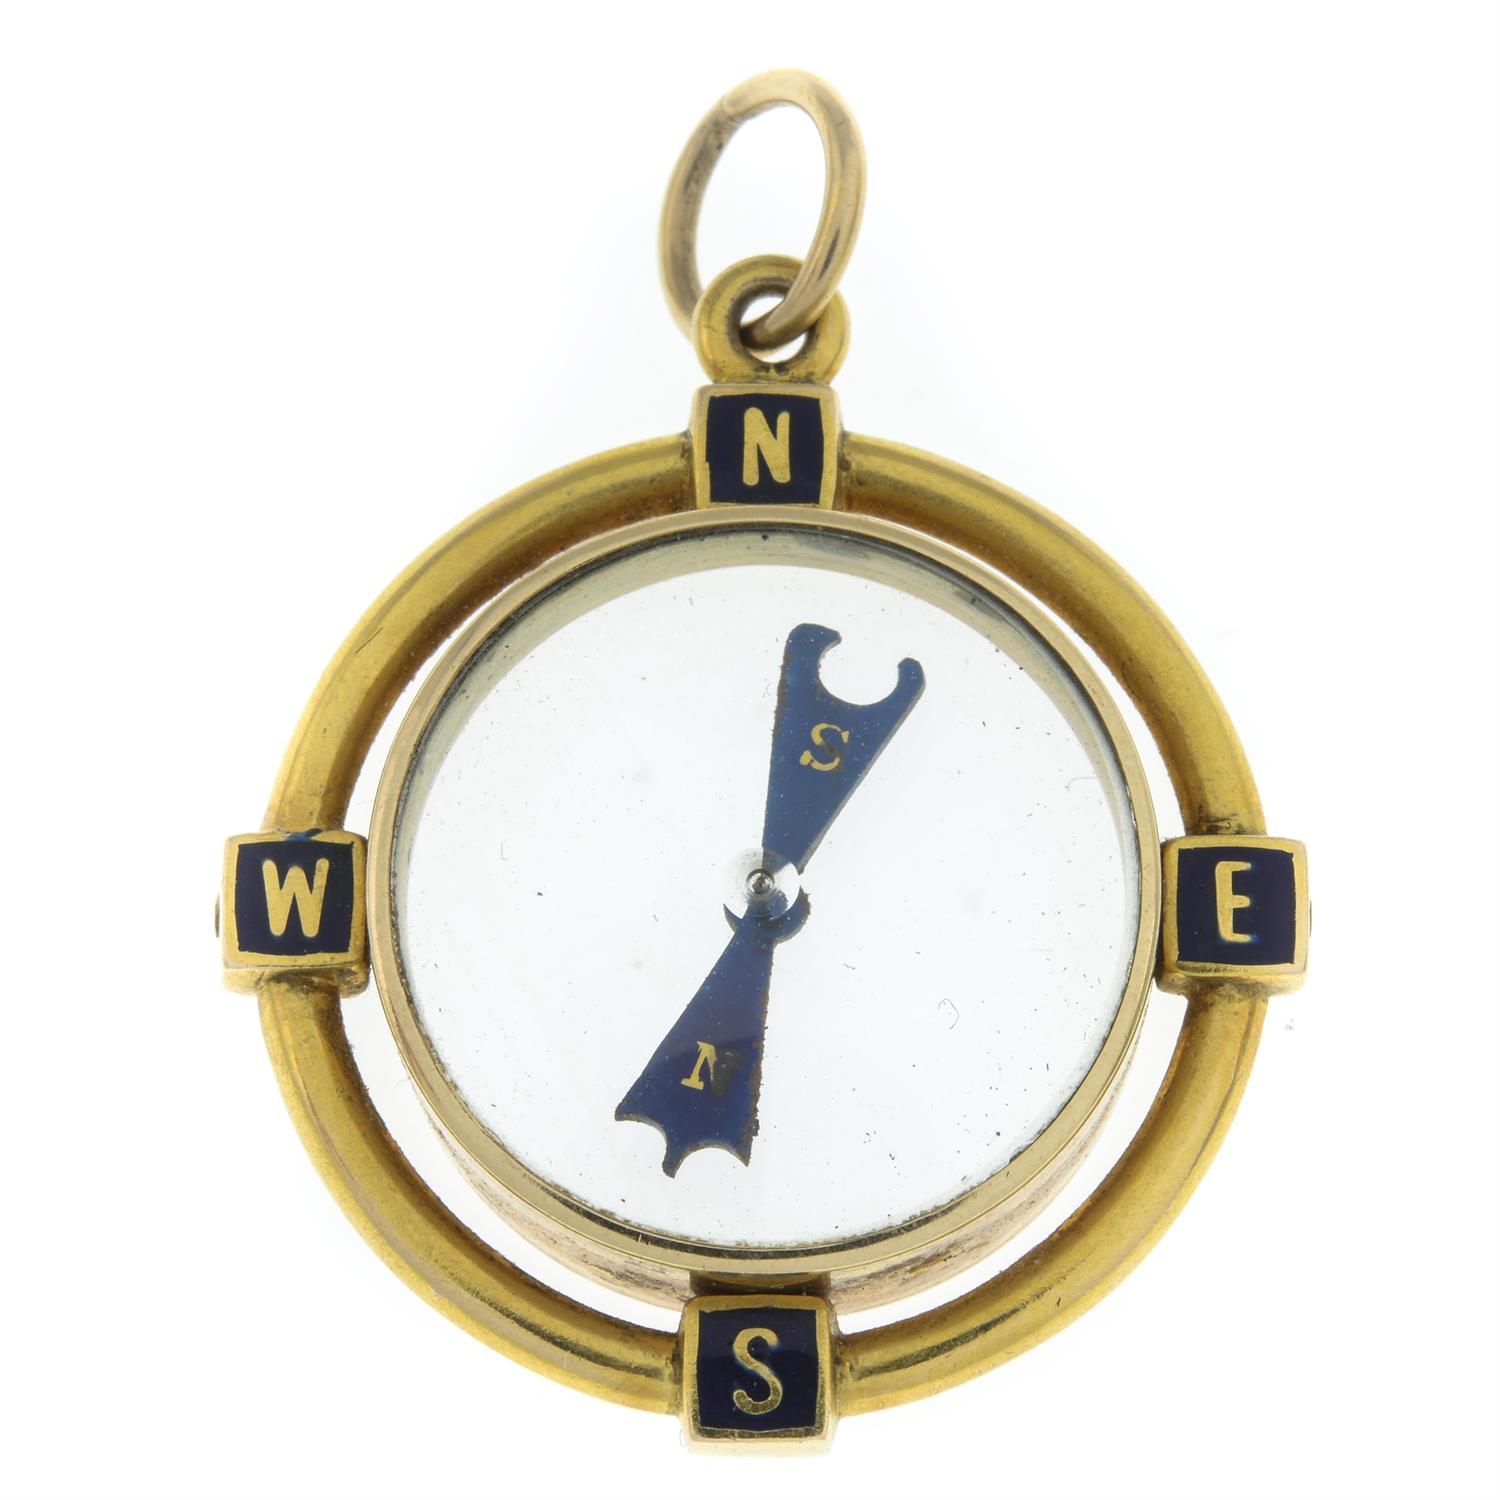 19th century gold enamel compass pendant / charm - Image 2 of 2